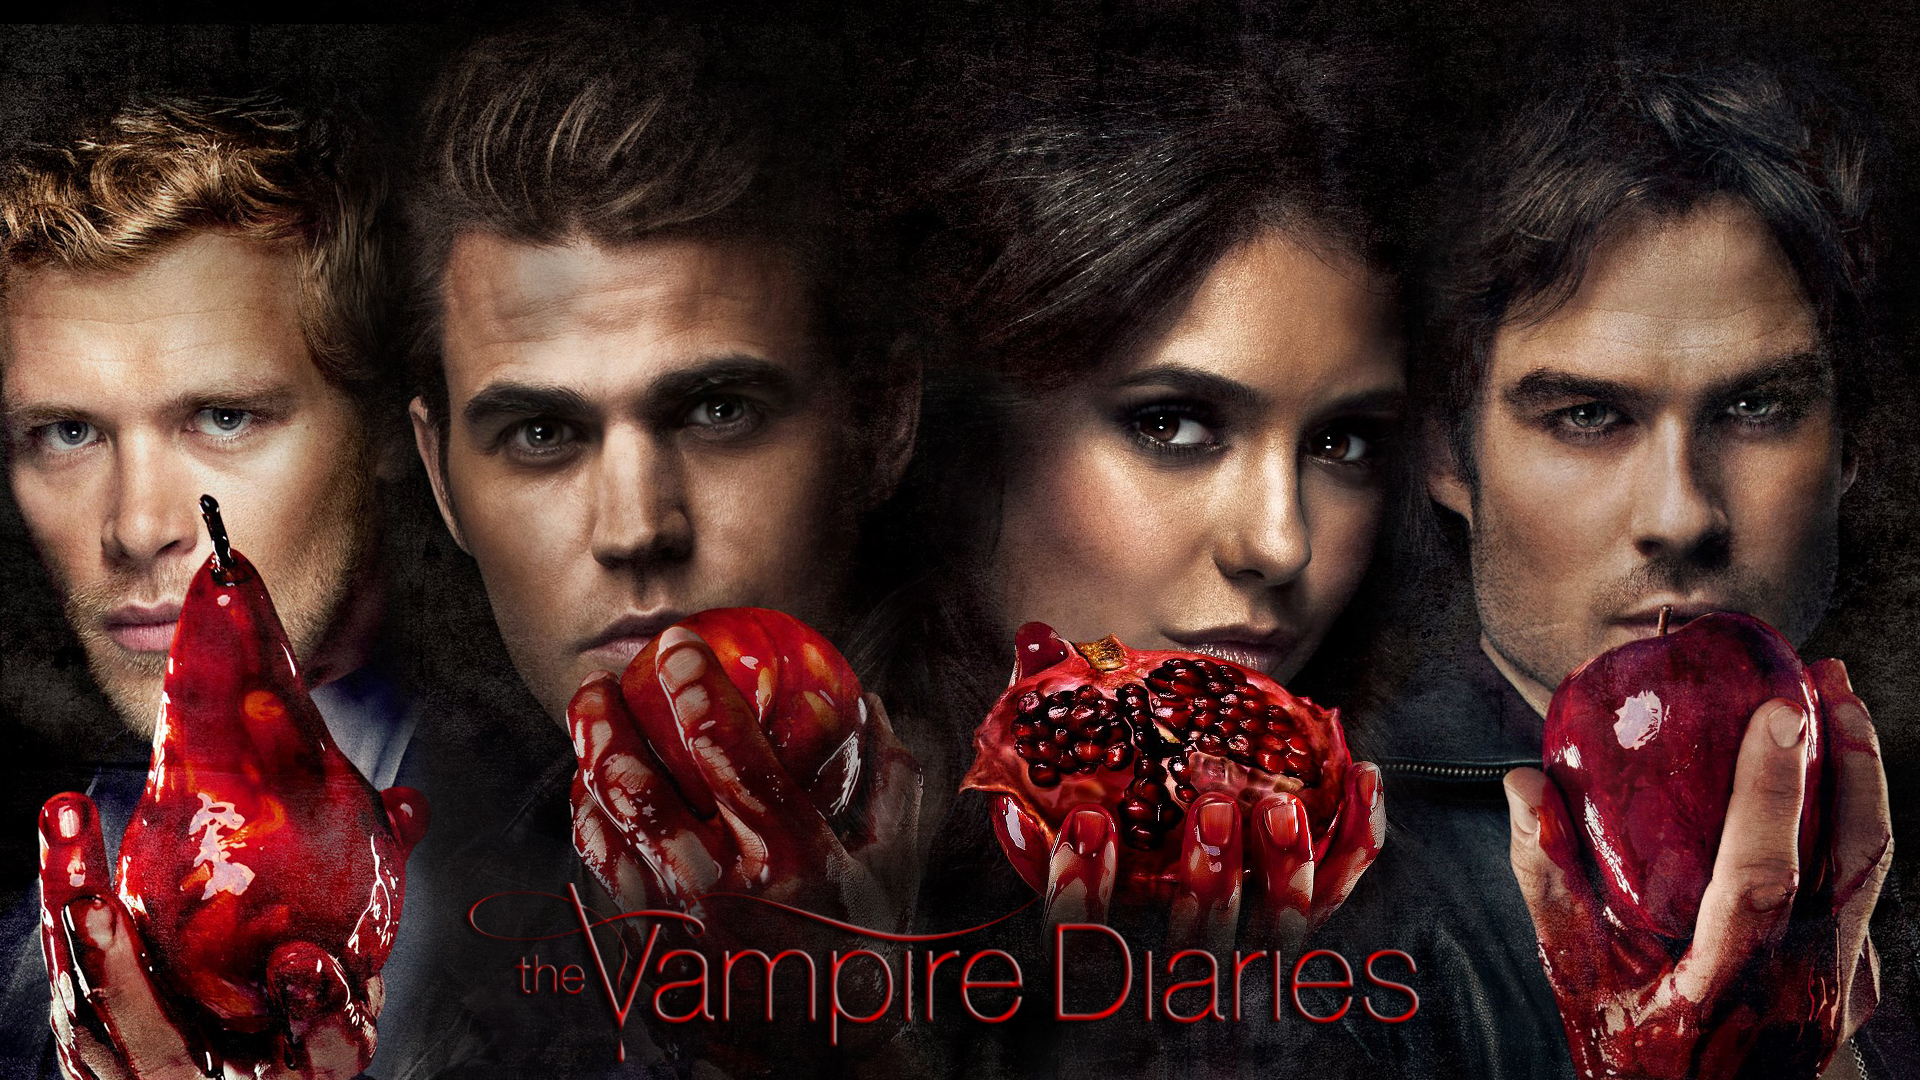 The Vampire Diaries TV Series 2014. 